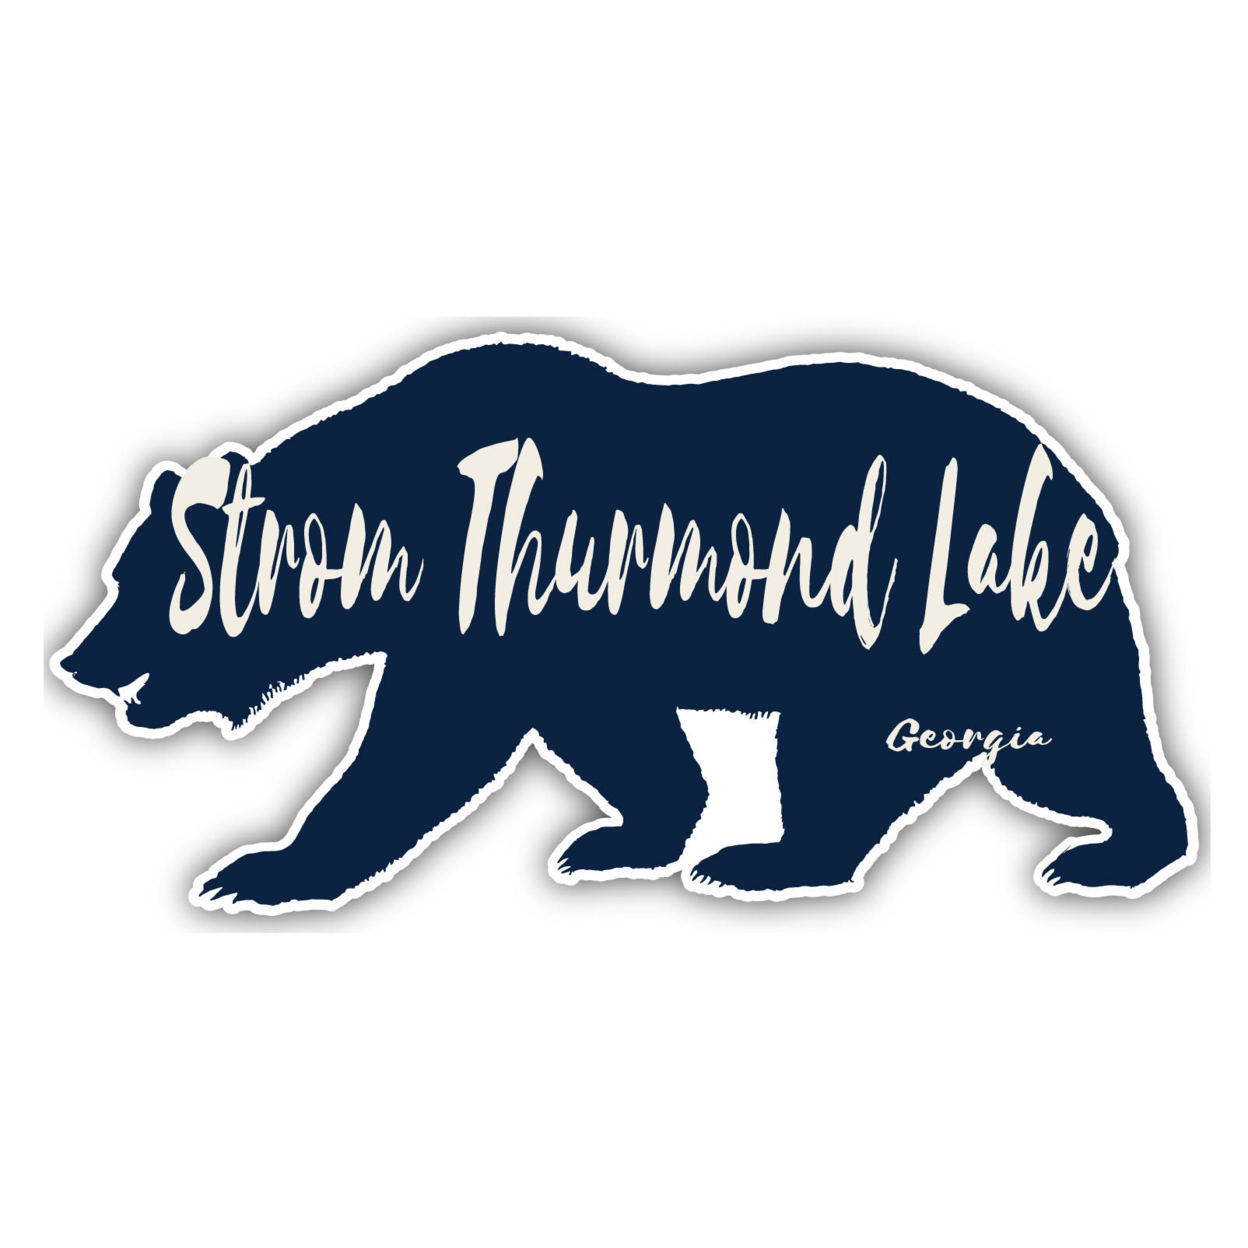 Strom Thurmond Lake Georgia Souvenir Decorative Stickers (Choose Theme And Size) - Single Unit, 2-Inch, Camp Life